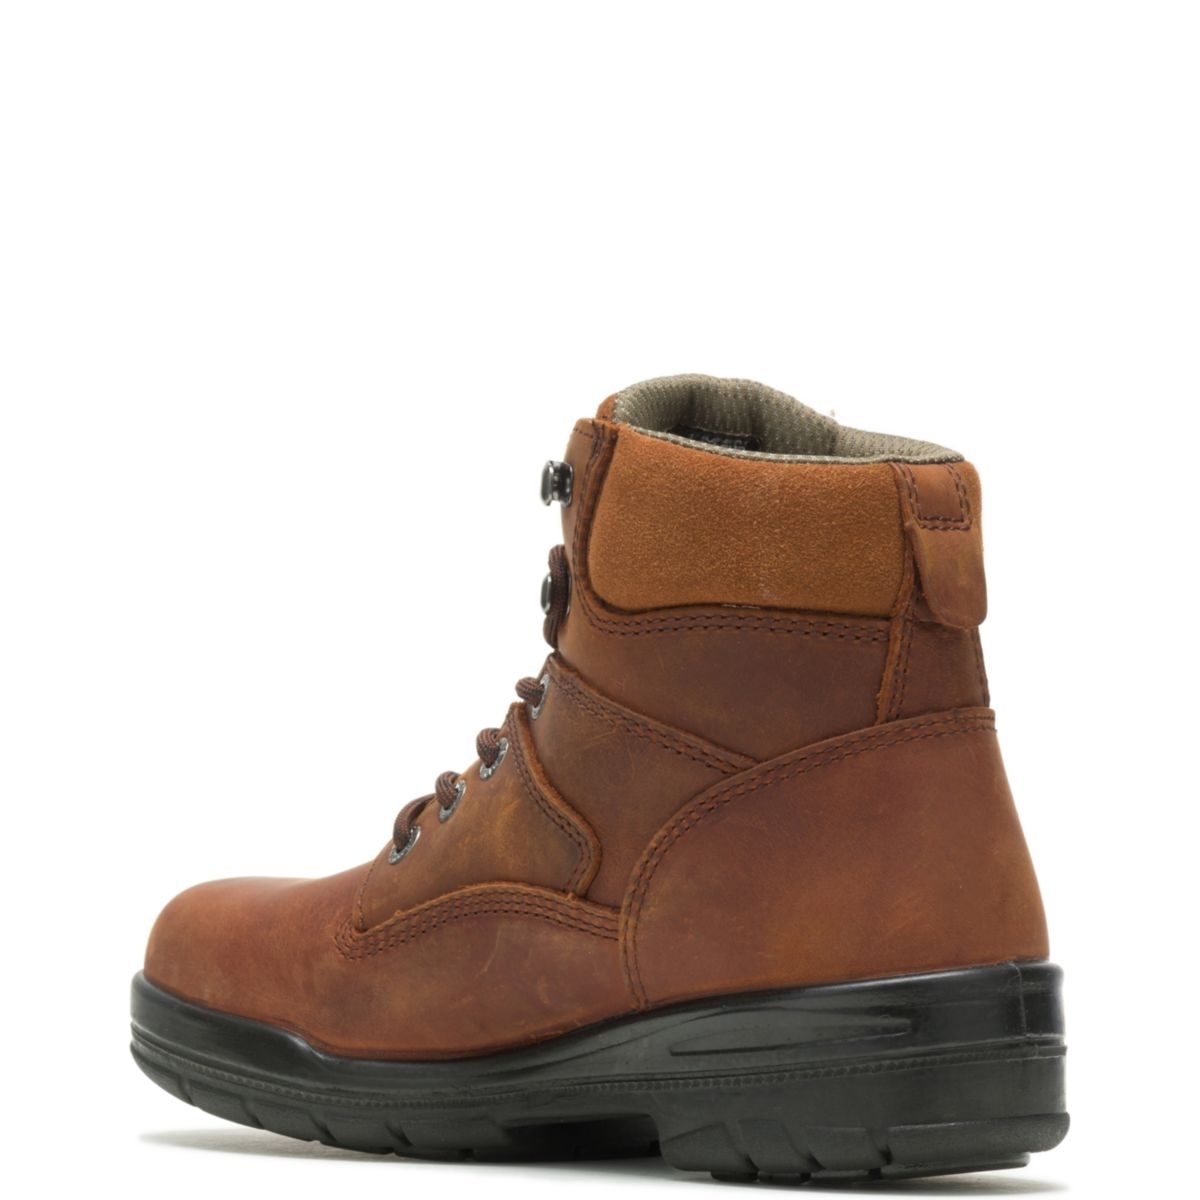 WOLVERINE Men's 6 DuraShocksÂ® Slip Resistant Steel Toe Work Boot Canyon - W02053 BRN/STL - BRN/STL, 9.5-M